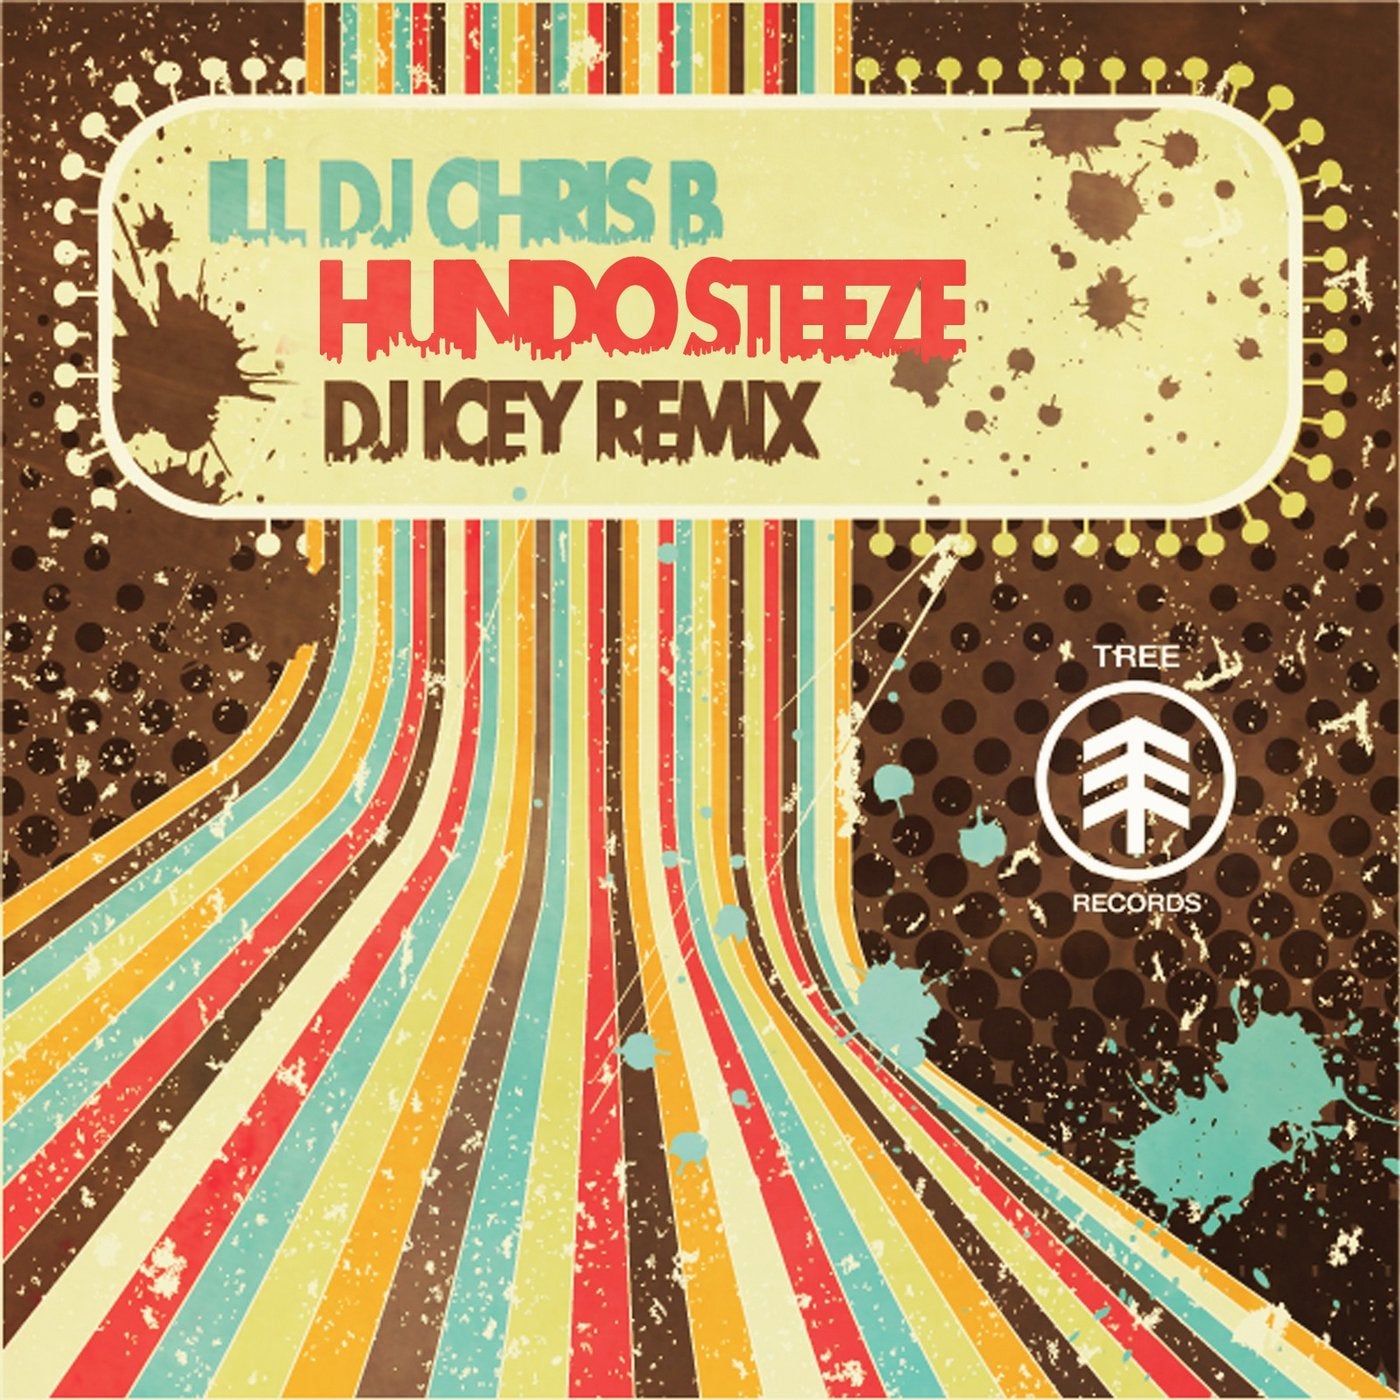 ILL DJ Chris B - Hundo Steeze